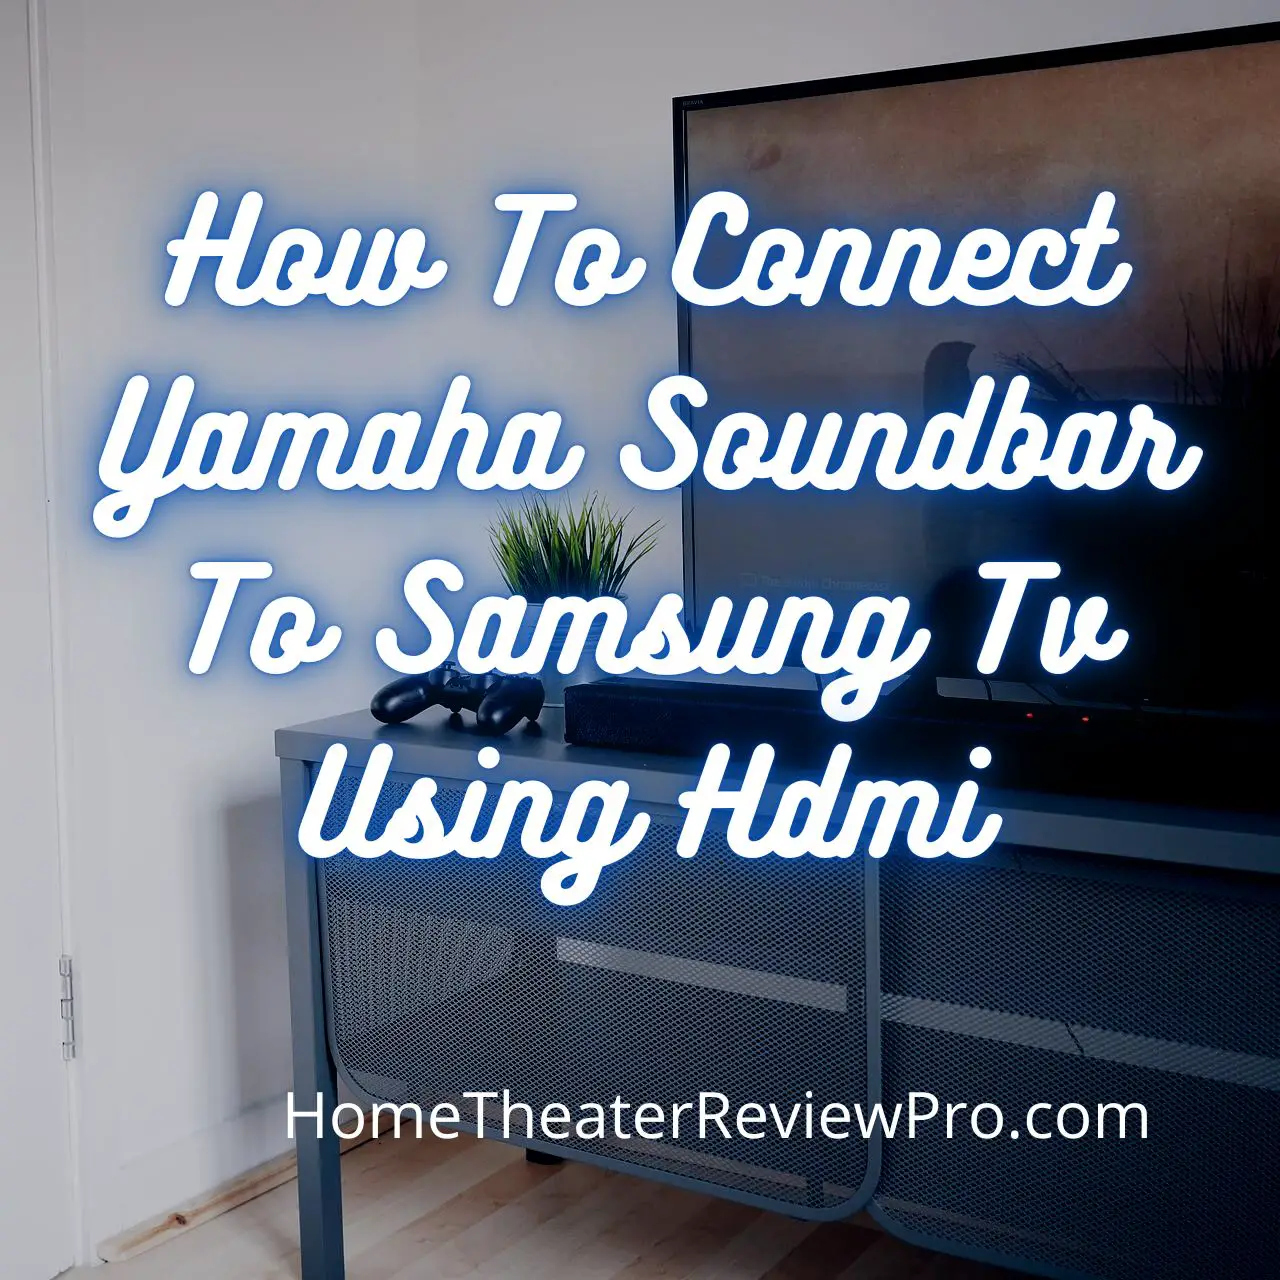 How To Connect Yamaha Soundbar To Samsung Tv Using Hdmi